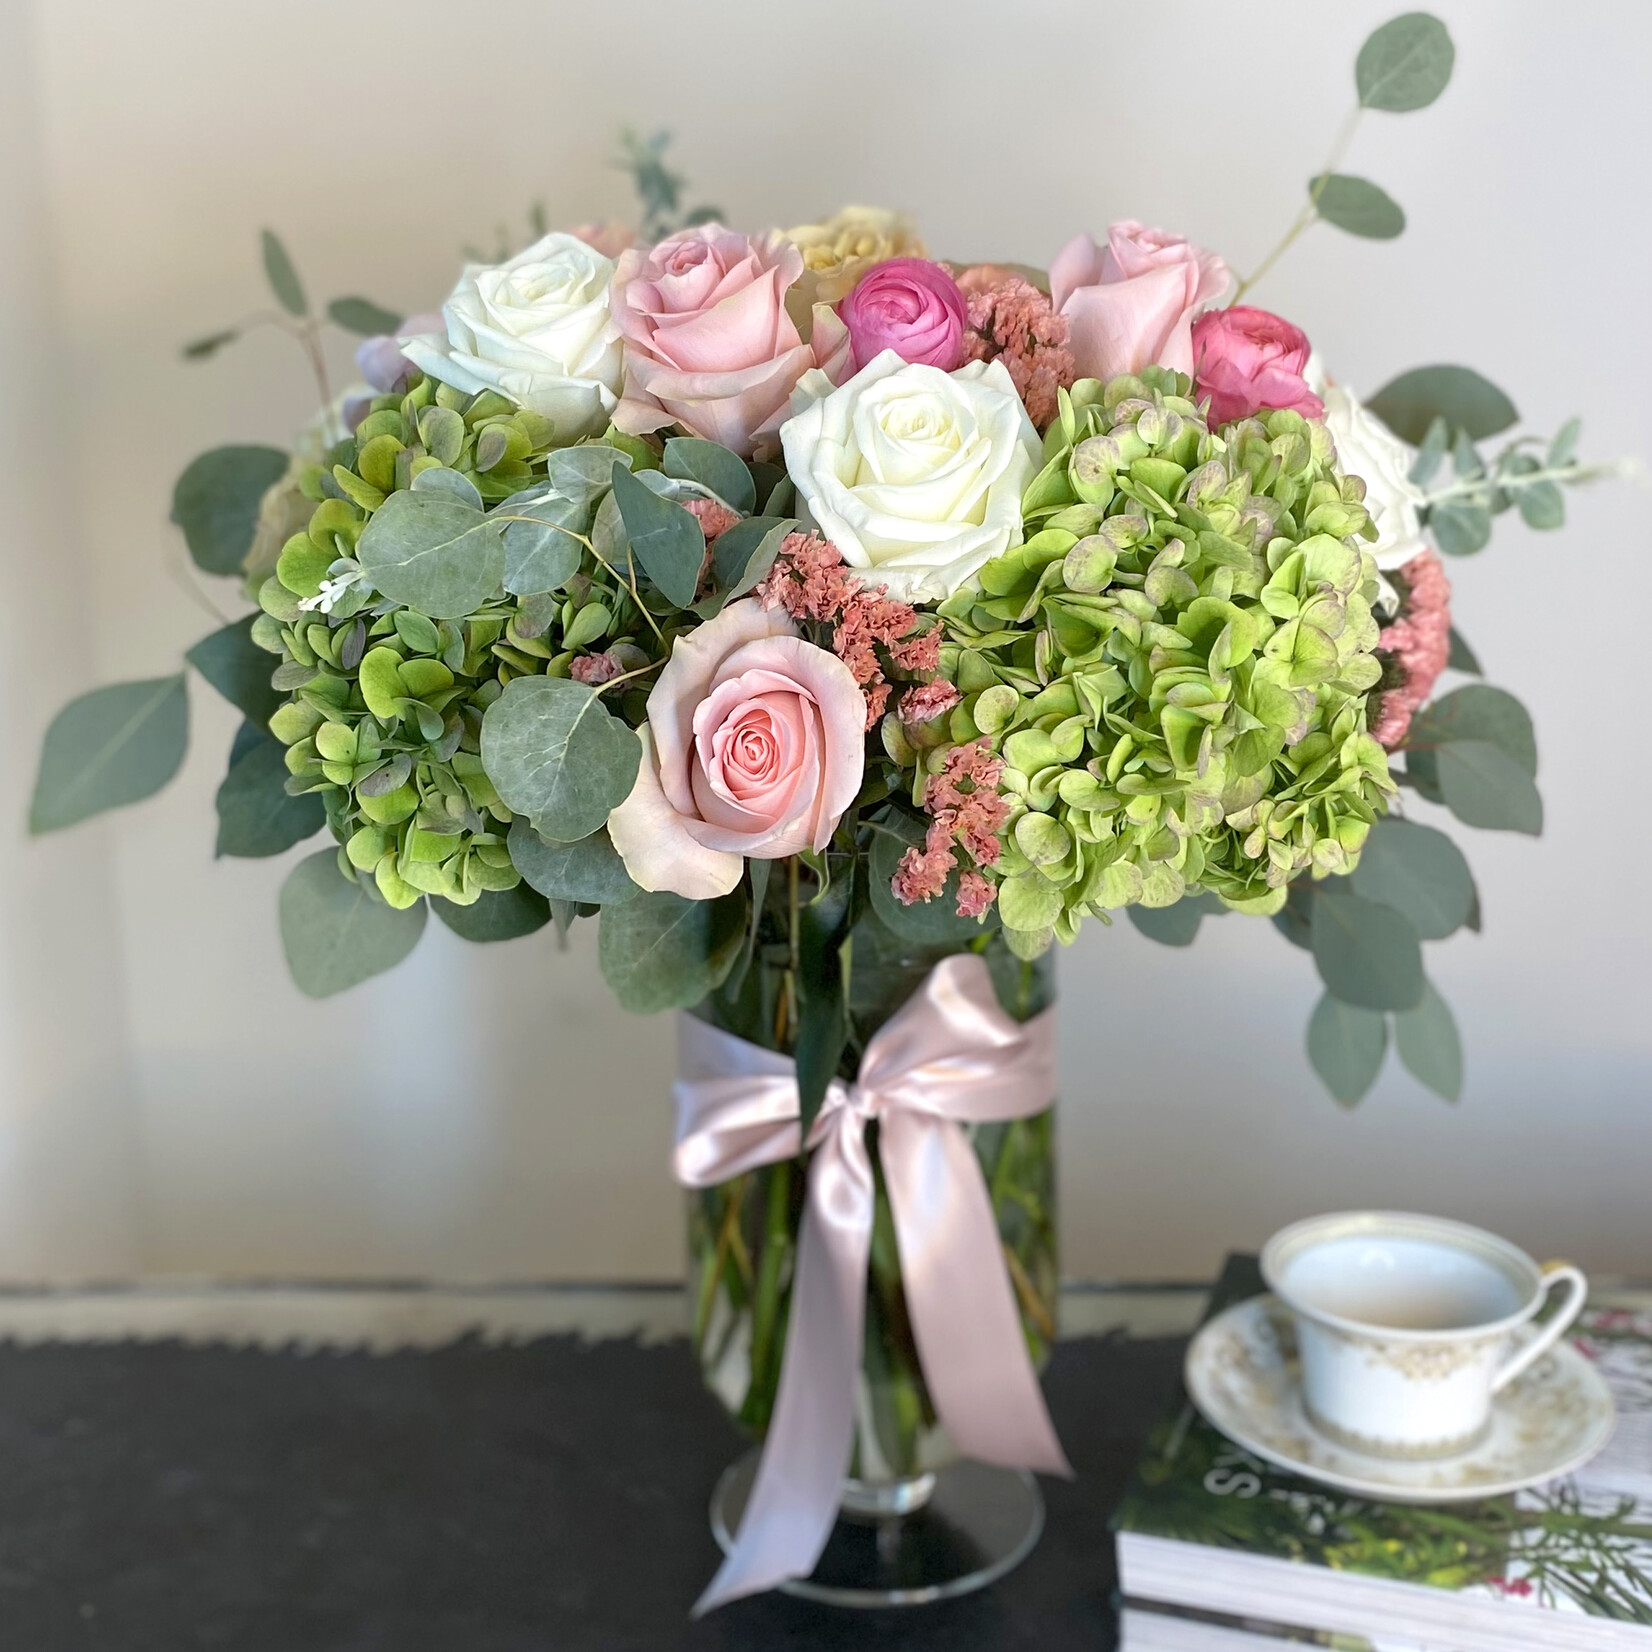 Luxe Sized Flower Arrangement – Designer Select: $200 - $250